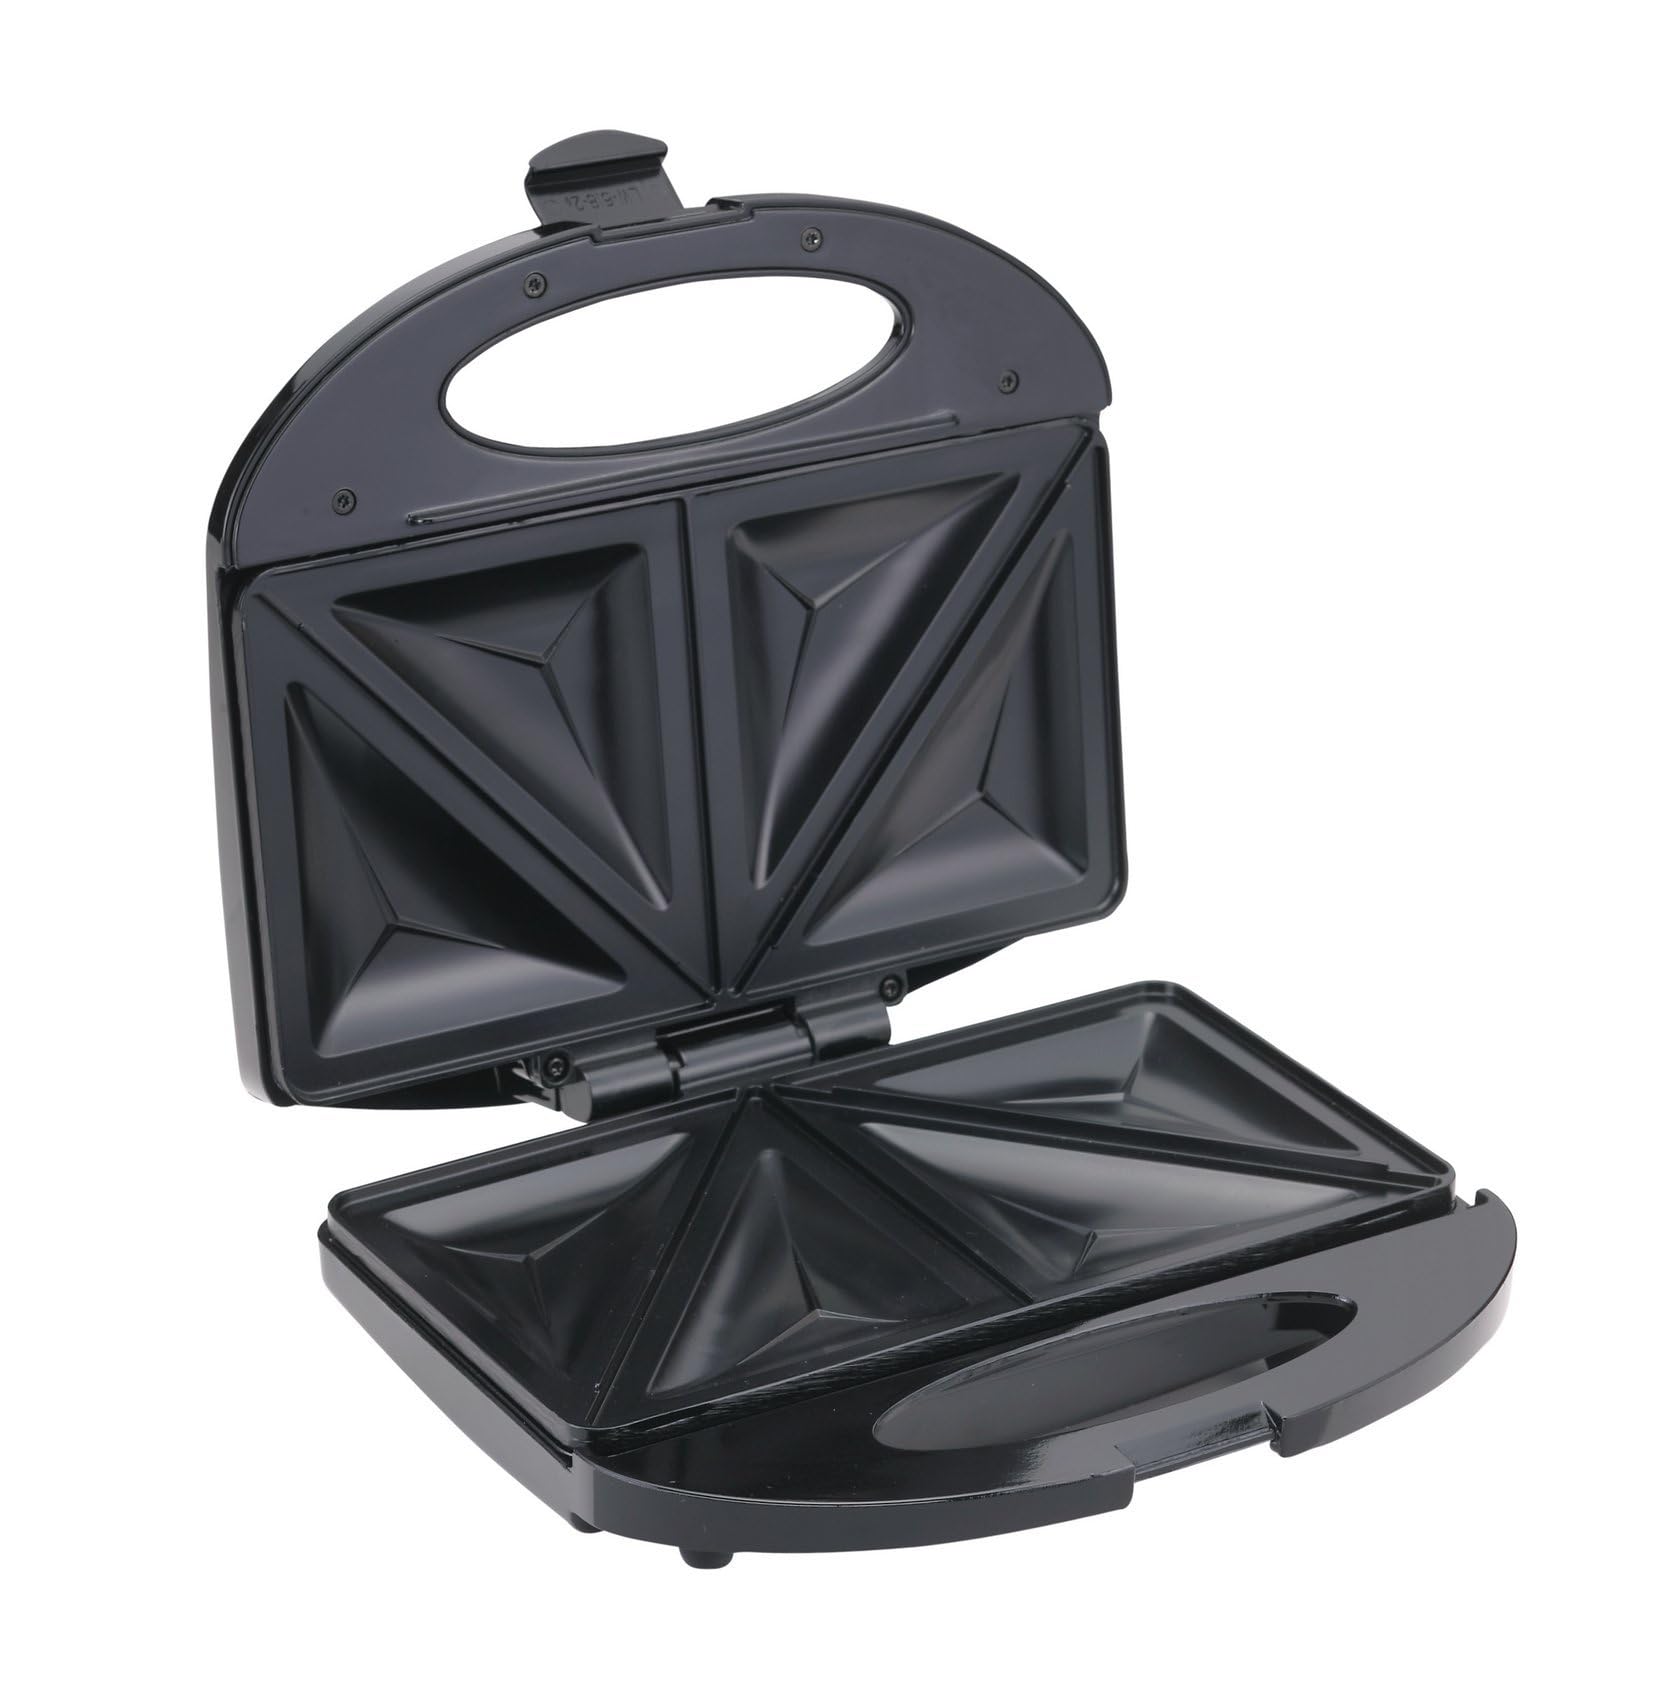 Black & Decker 600W 2 Slice Non-Stick Sandwich Maker Black 1Years Warranty بلاك أند ديكر صانعة الساندوتش 600 واط، شريحتين ضمان 1 سنة